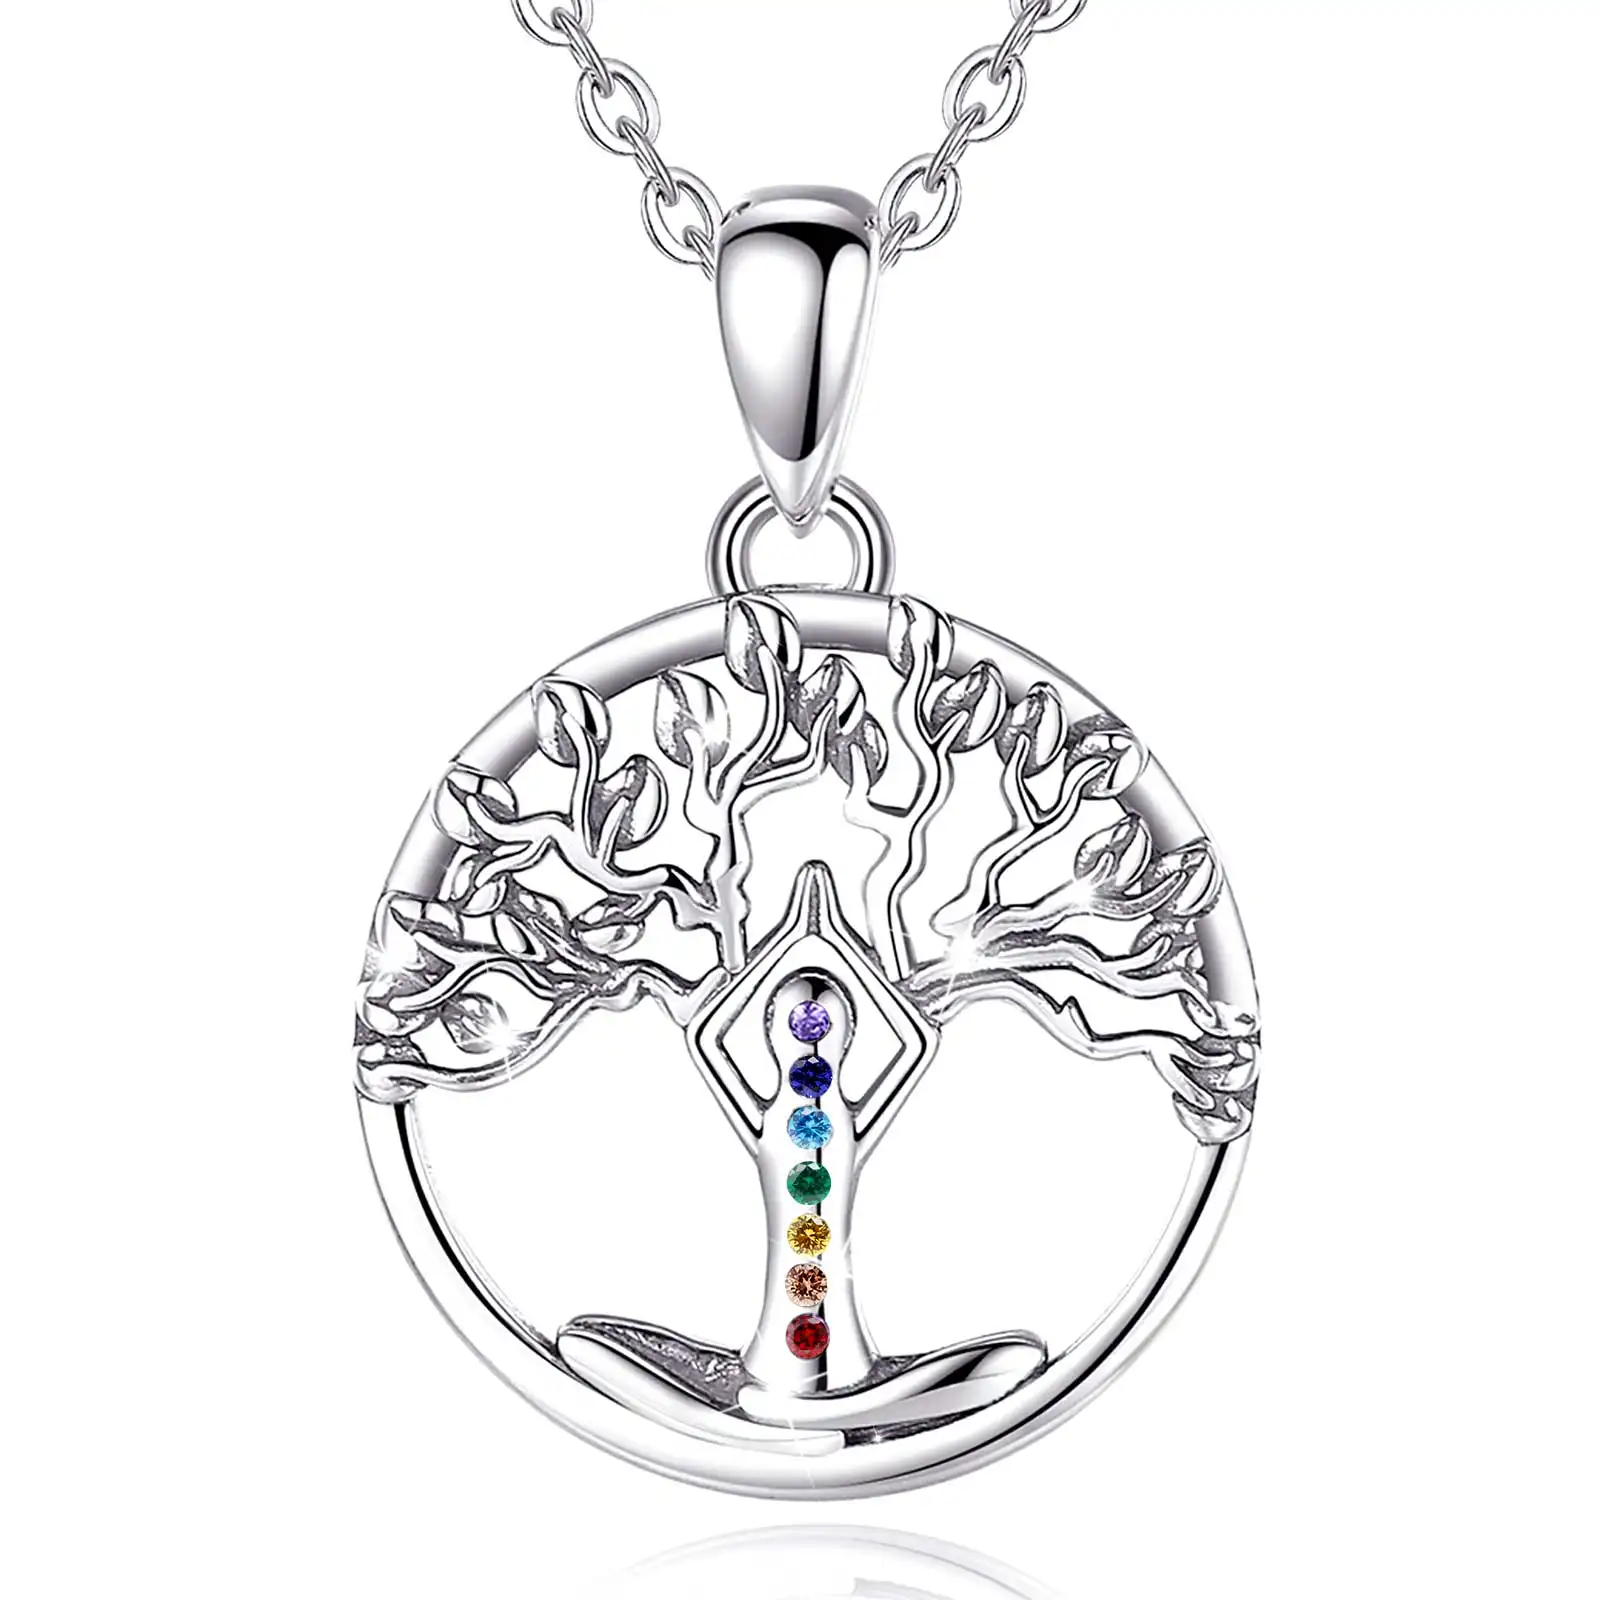 Merryshine 925 sterling silver family tree of life yoga chakra pendant necklace